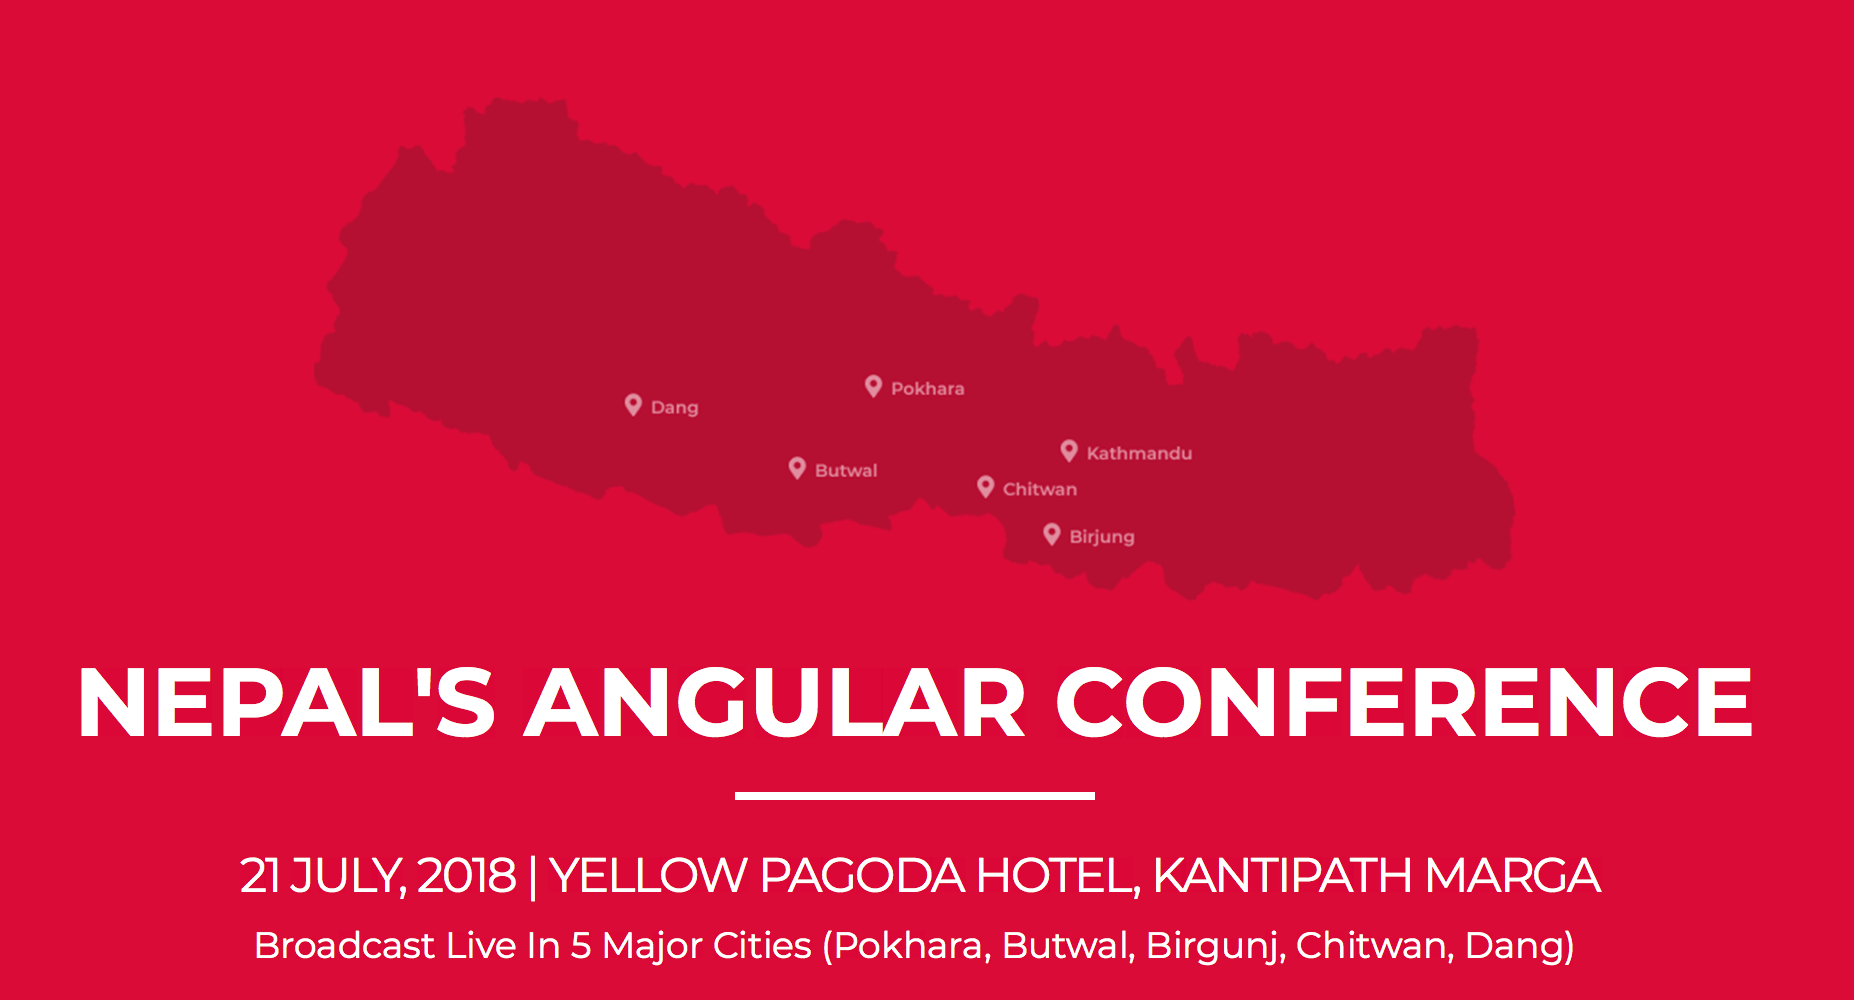 Nepal's Angular Conference